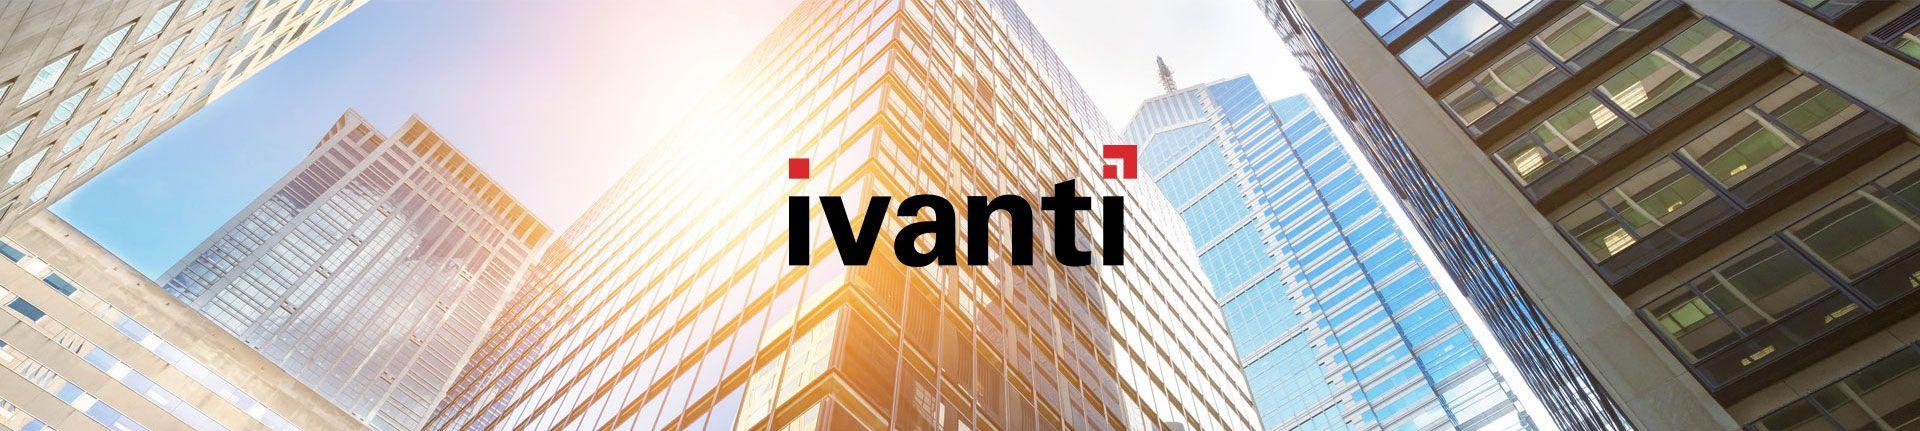 Ivanti Logo - Ivanti Software | Unified IT Management Software Solutions